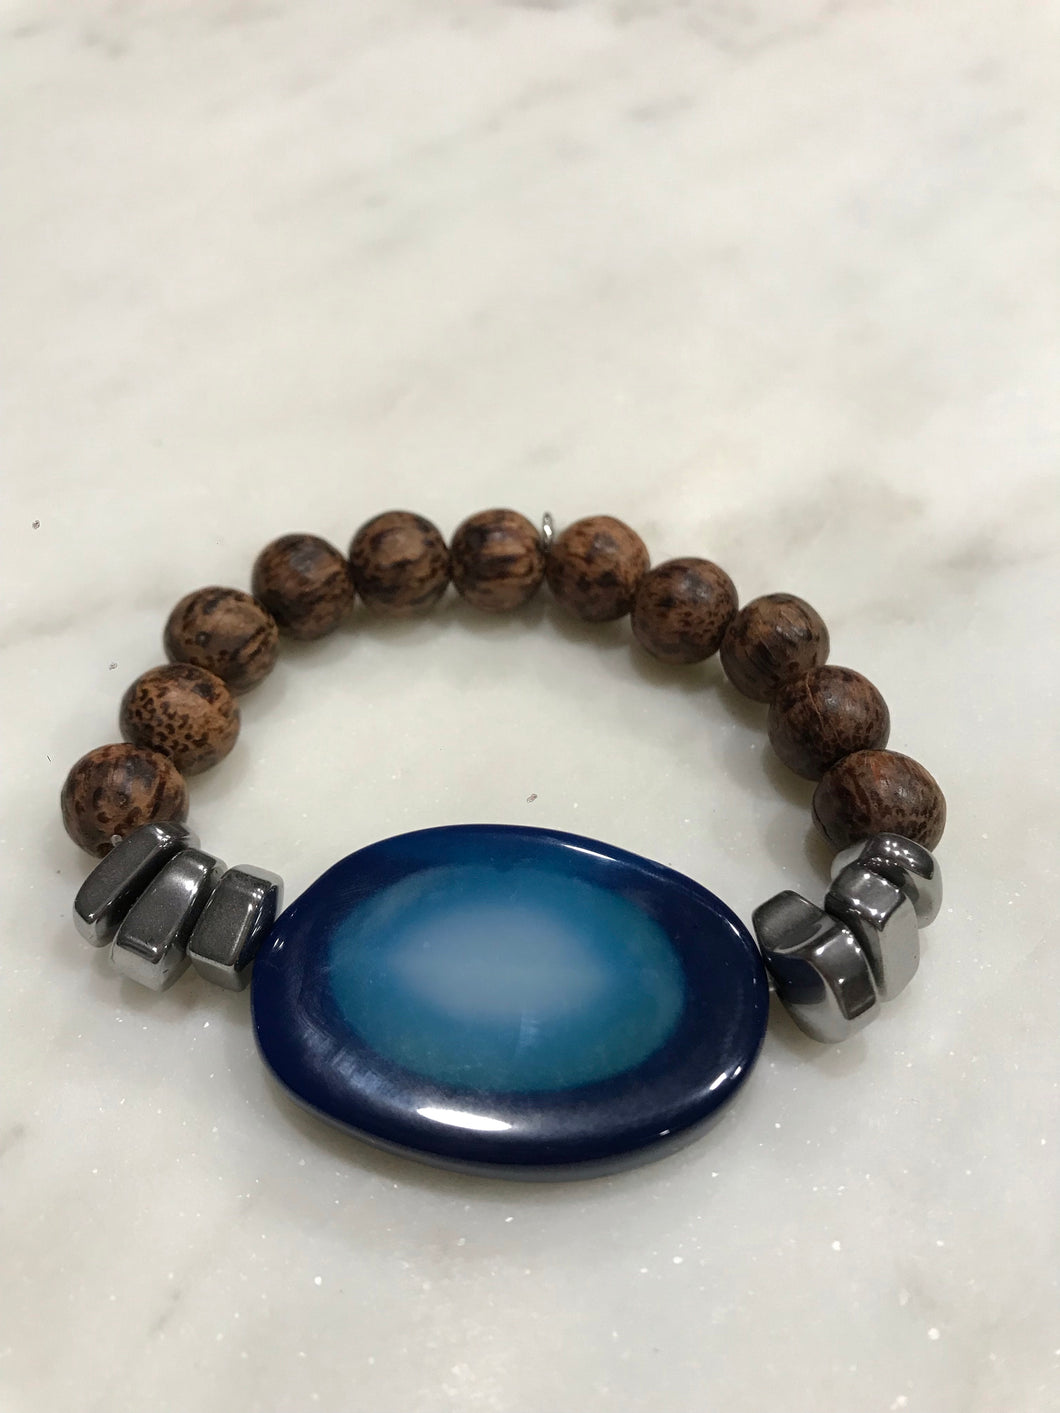 Blue agate center piece bracelet